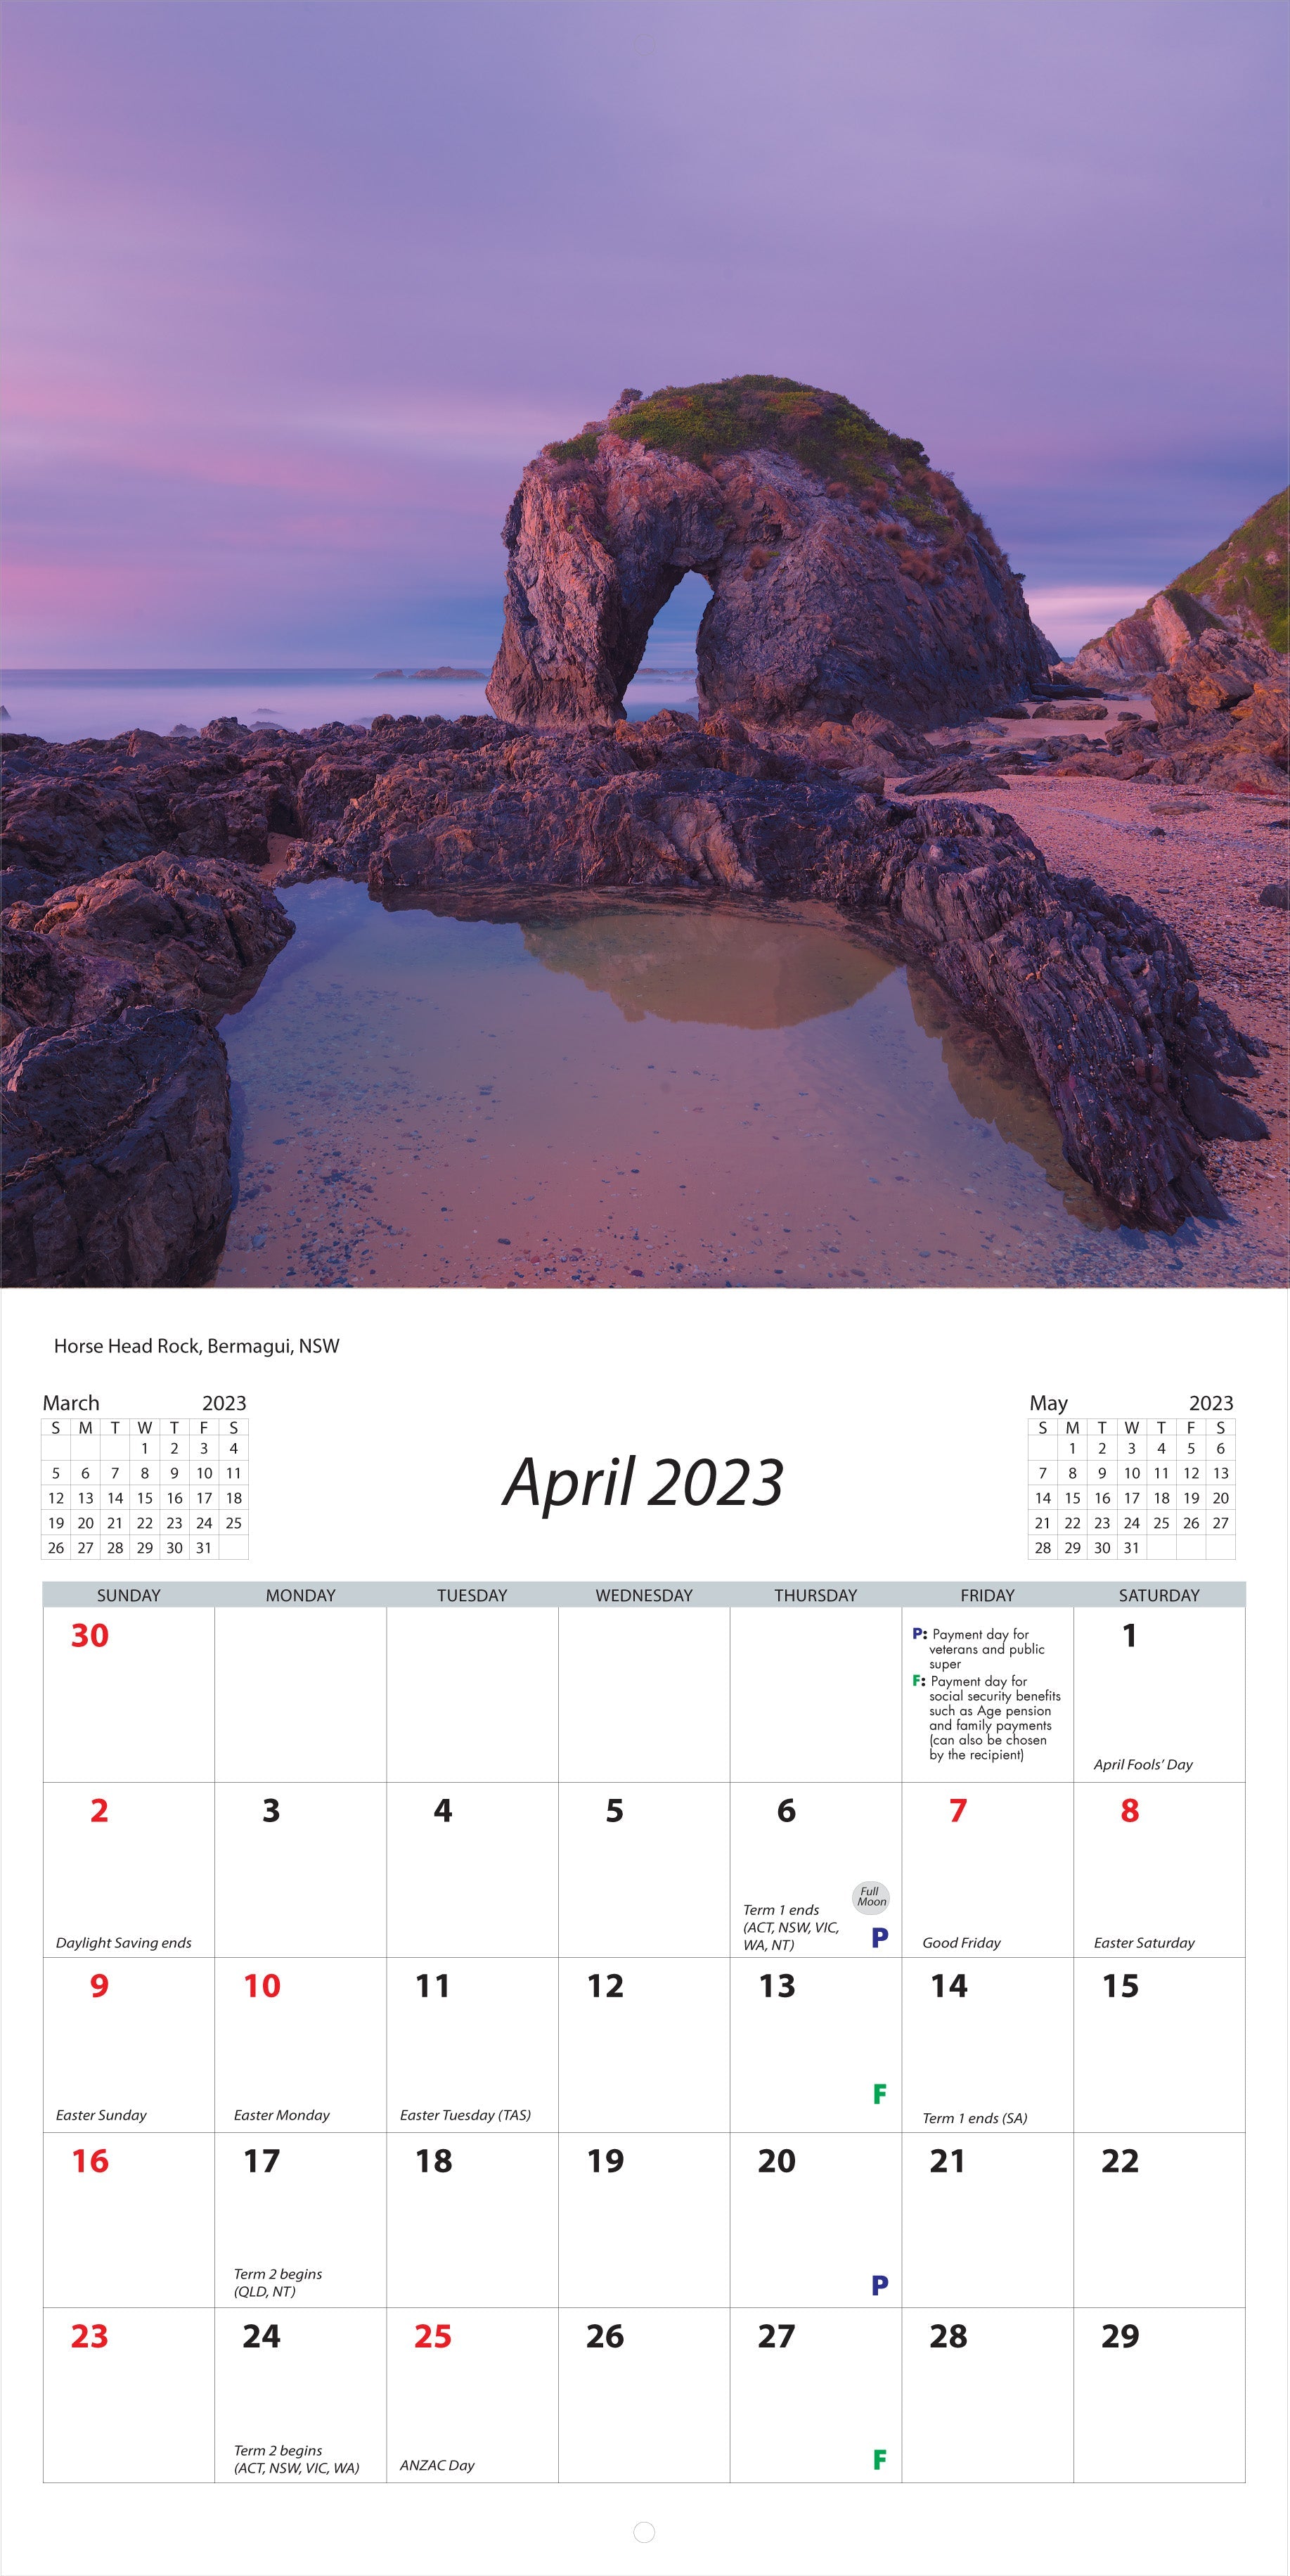 2023 Australian Seascapes - Sqaure Wall Calendar